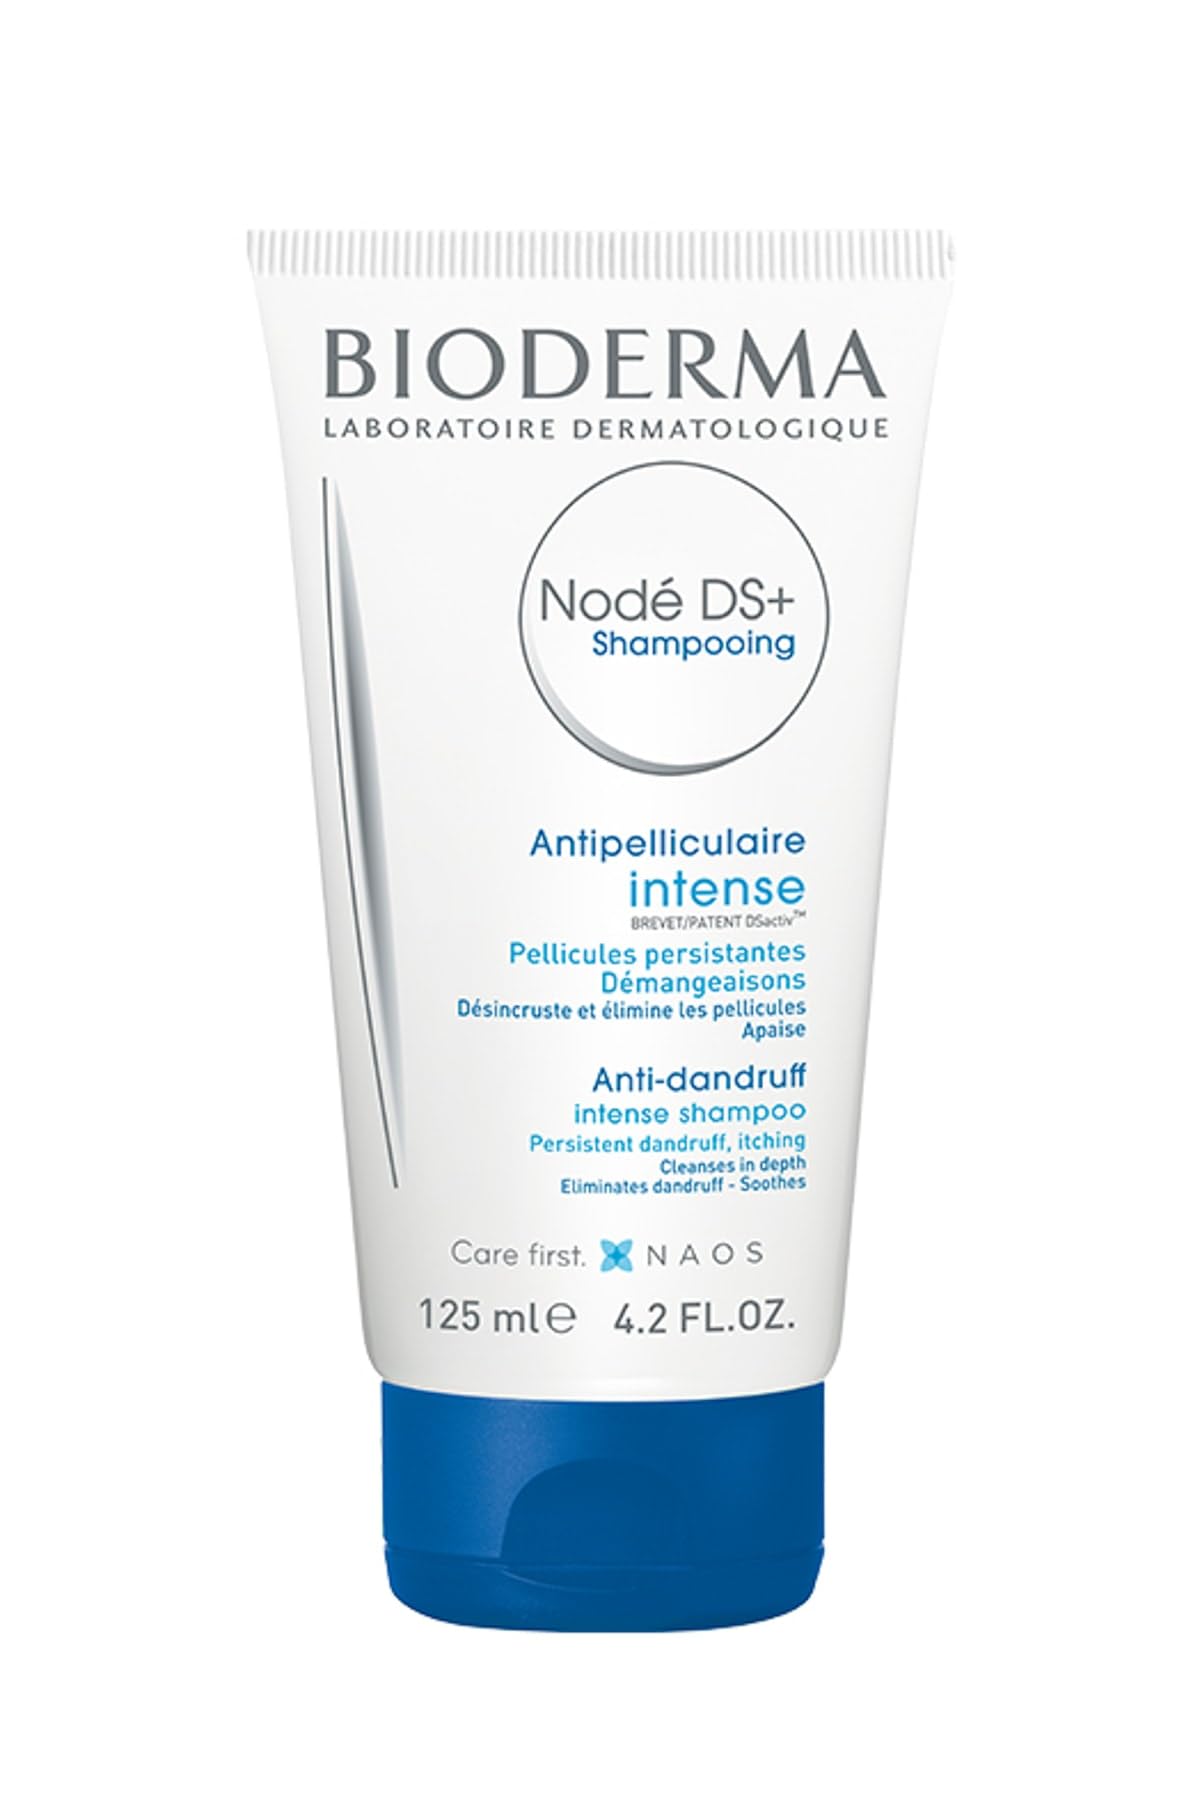 Bioderma Node DS+ Shampooing Anti Dandruff Intense Shampoo Hair Scalp Care, White, 125 ml (BIO1400037) Shampoo from Bioderma